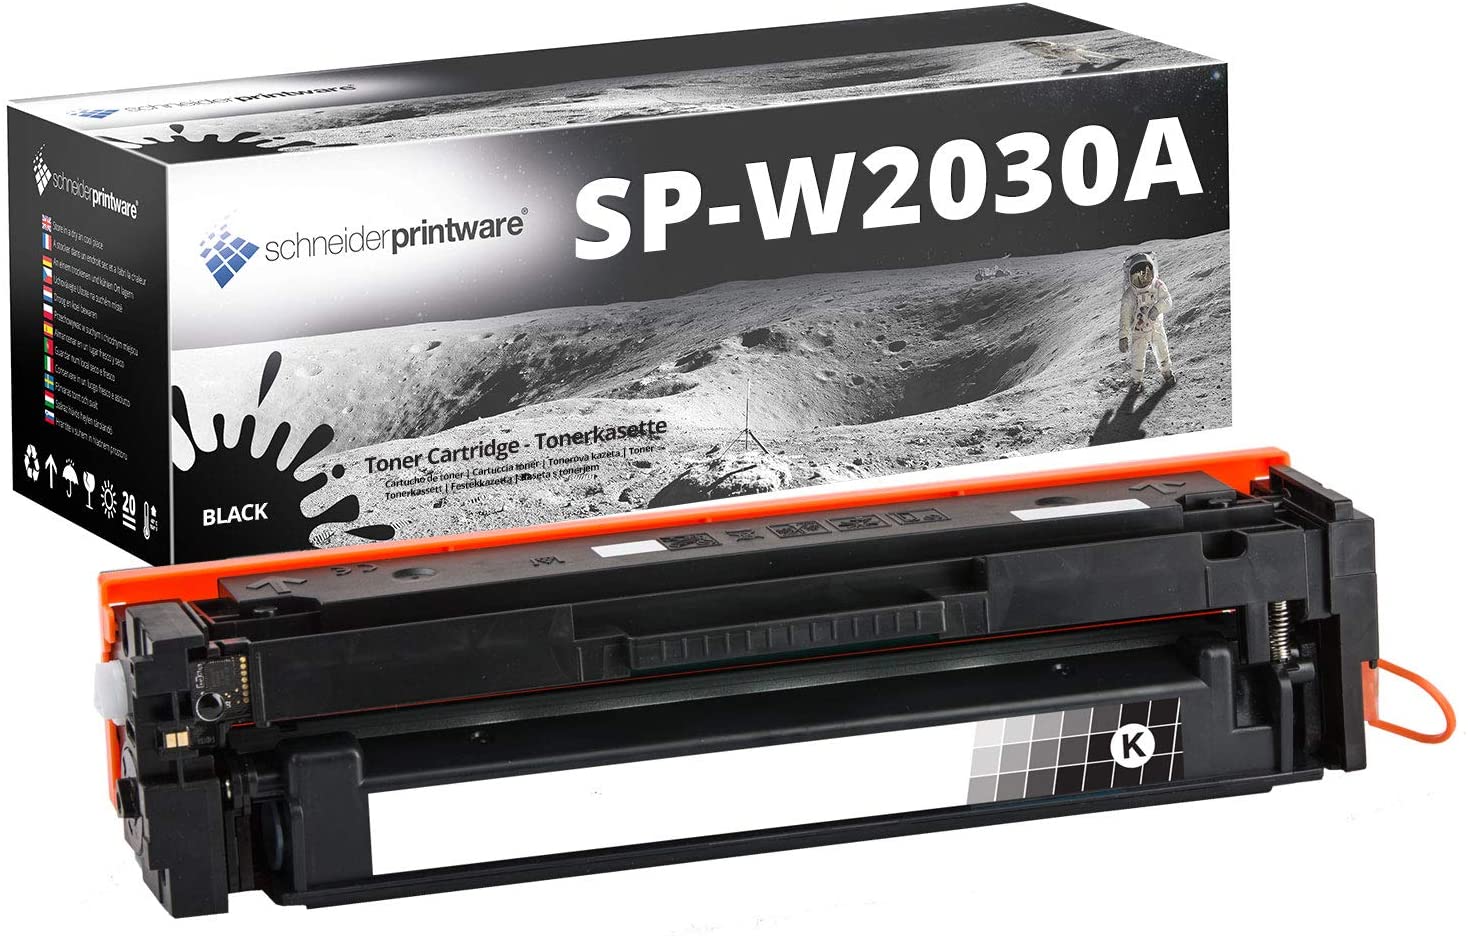 Schneiderprintware Toner ersetzt HP 415A W2030A Schwarz